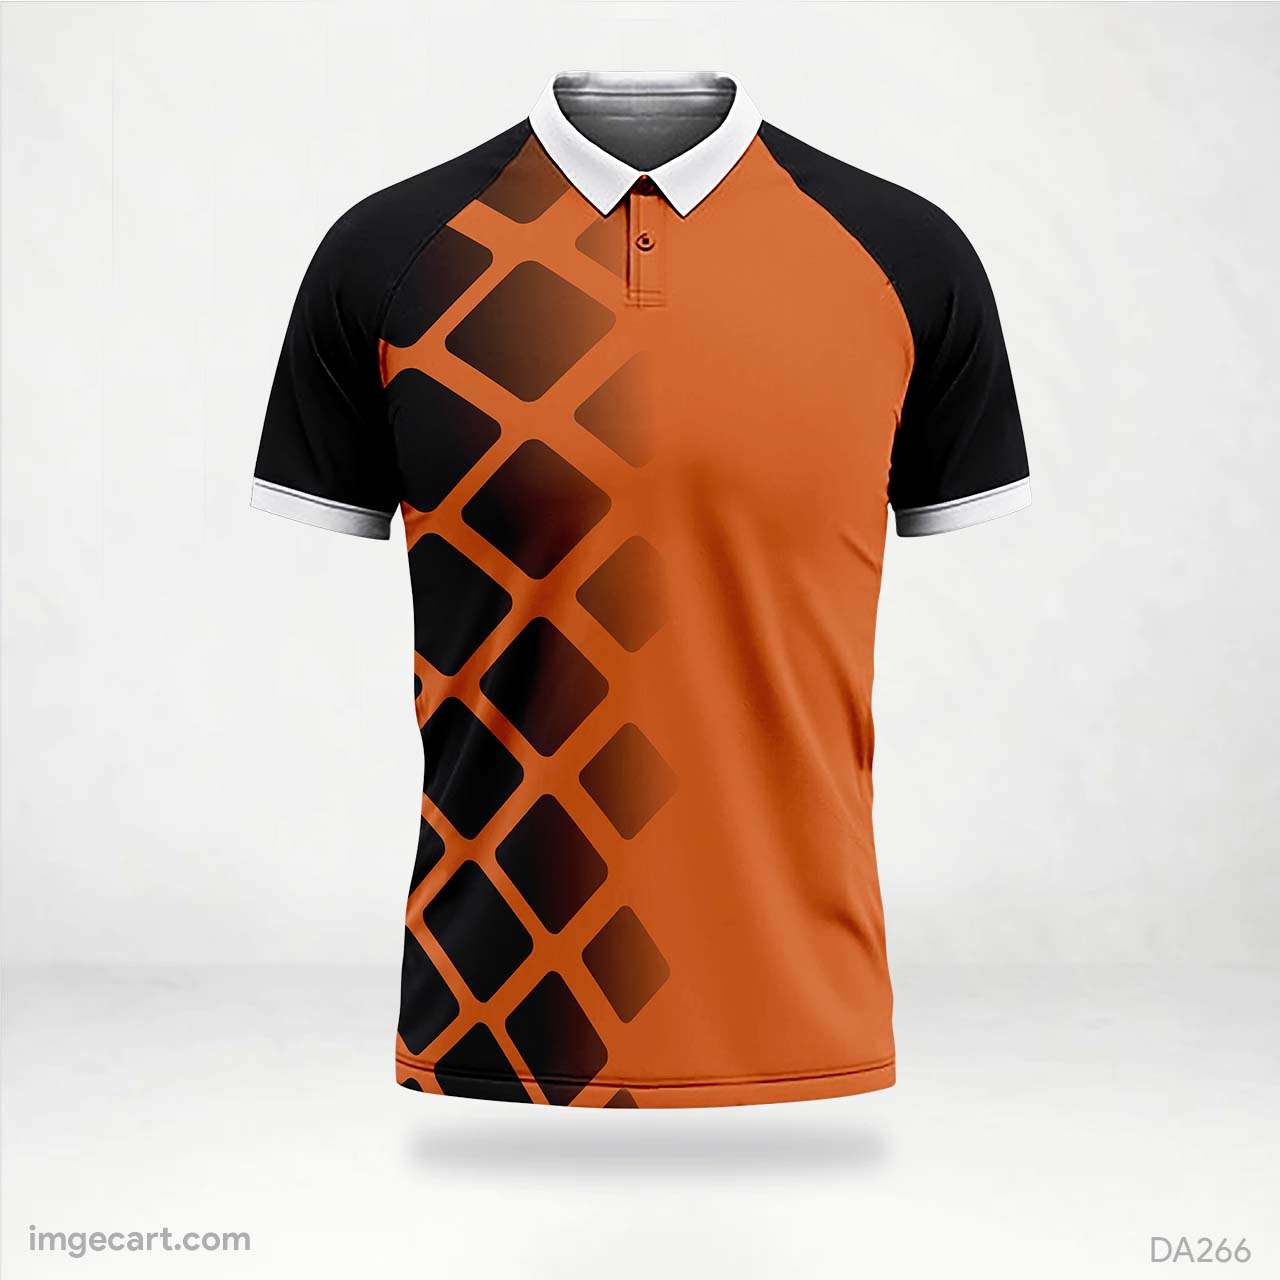 Football Jersey Design Black and Orange Sublimation - imgecart